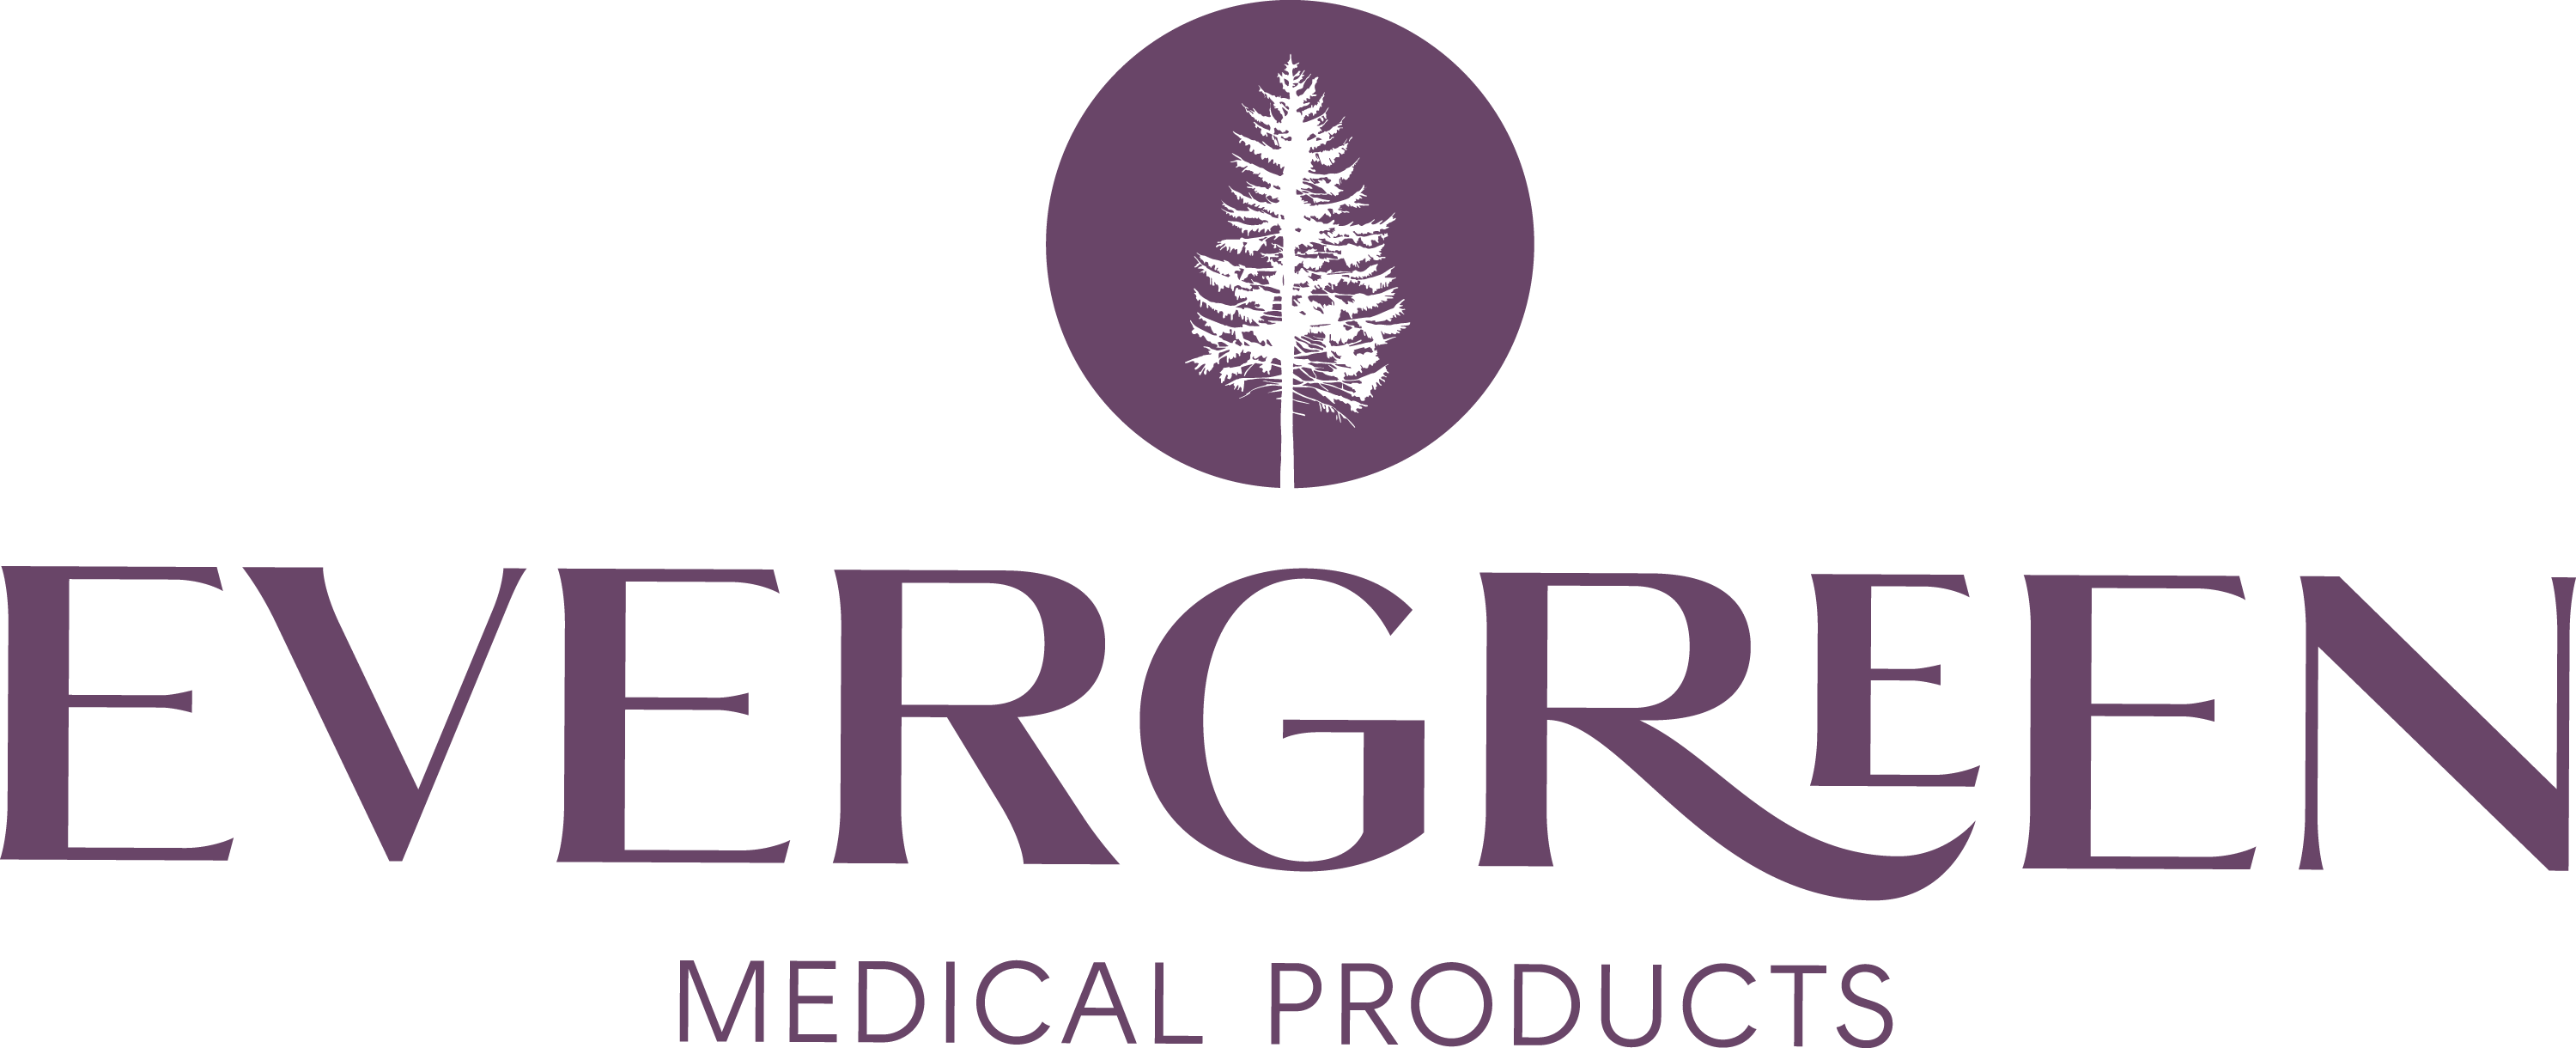 Evergreen Medical Products manufacturer logo